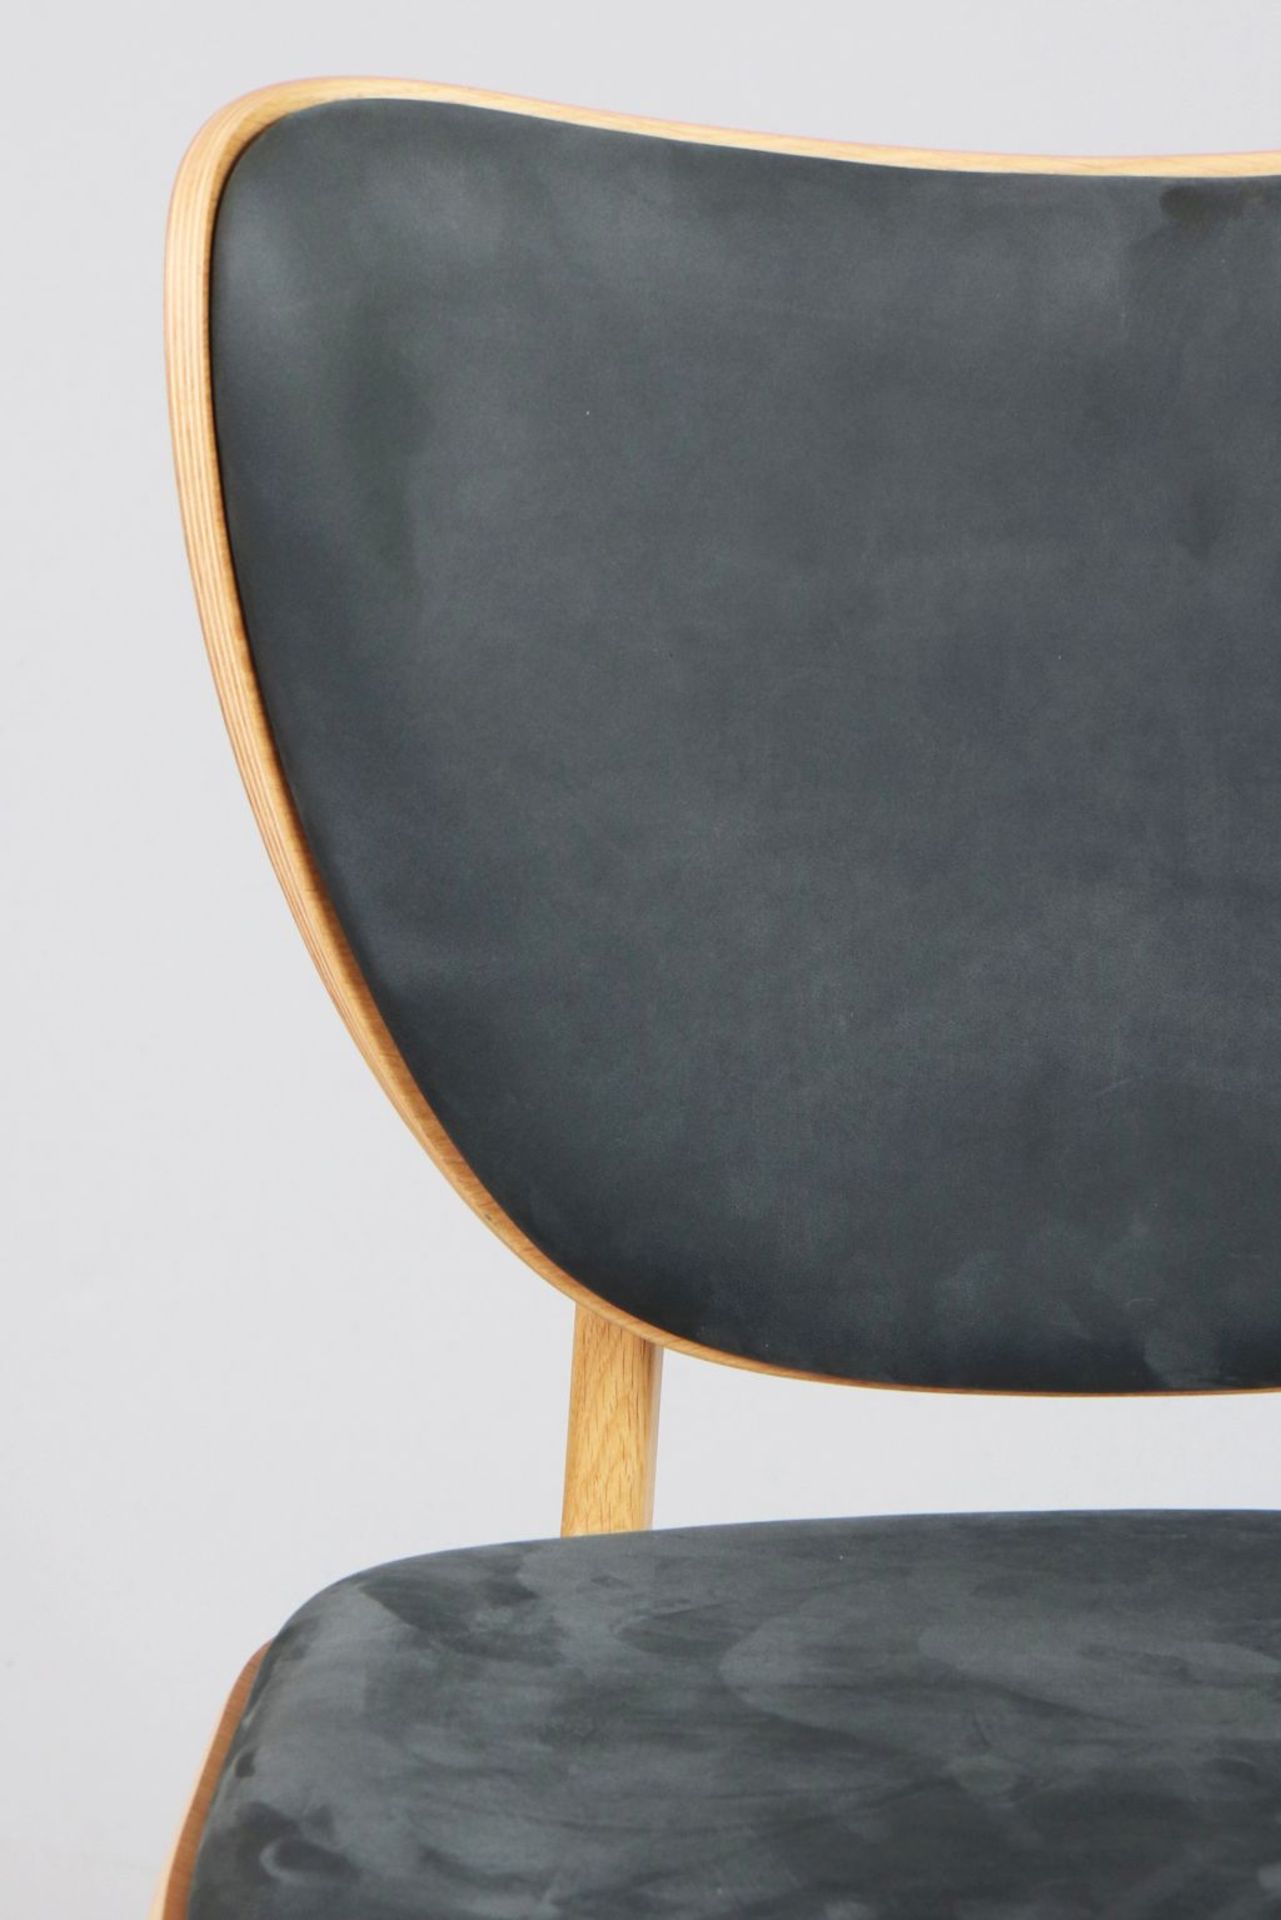 Stuhl (¨Elephant chair¨) im skandinavischen Mid Century Stil - Image 2 of 3